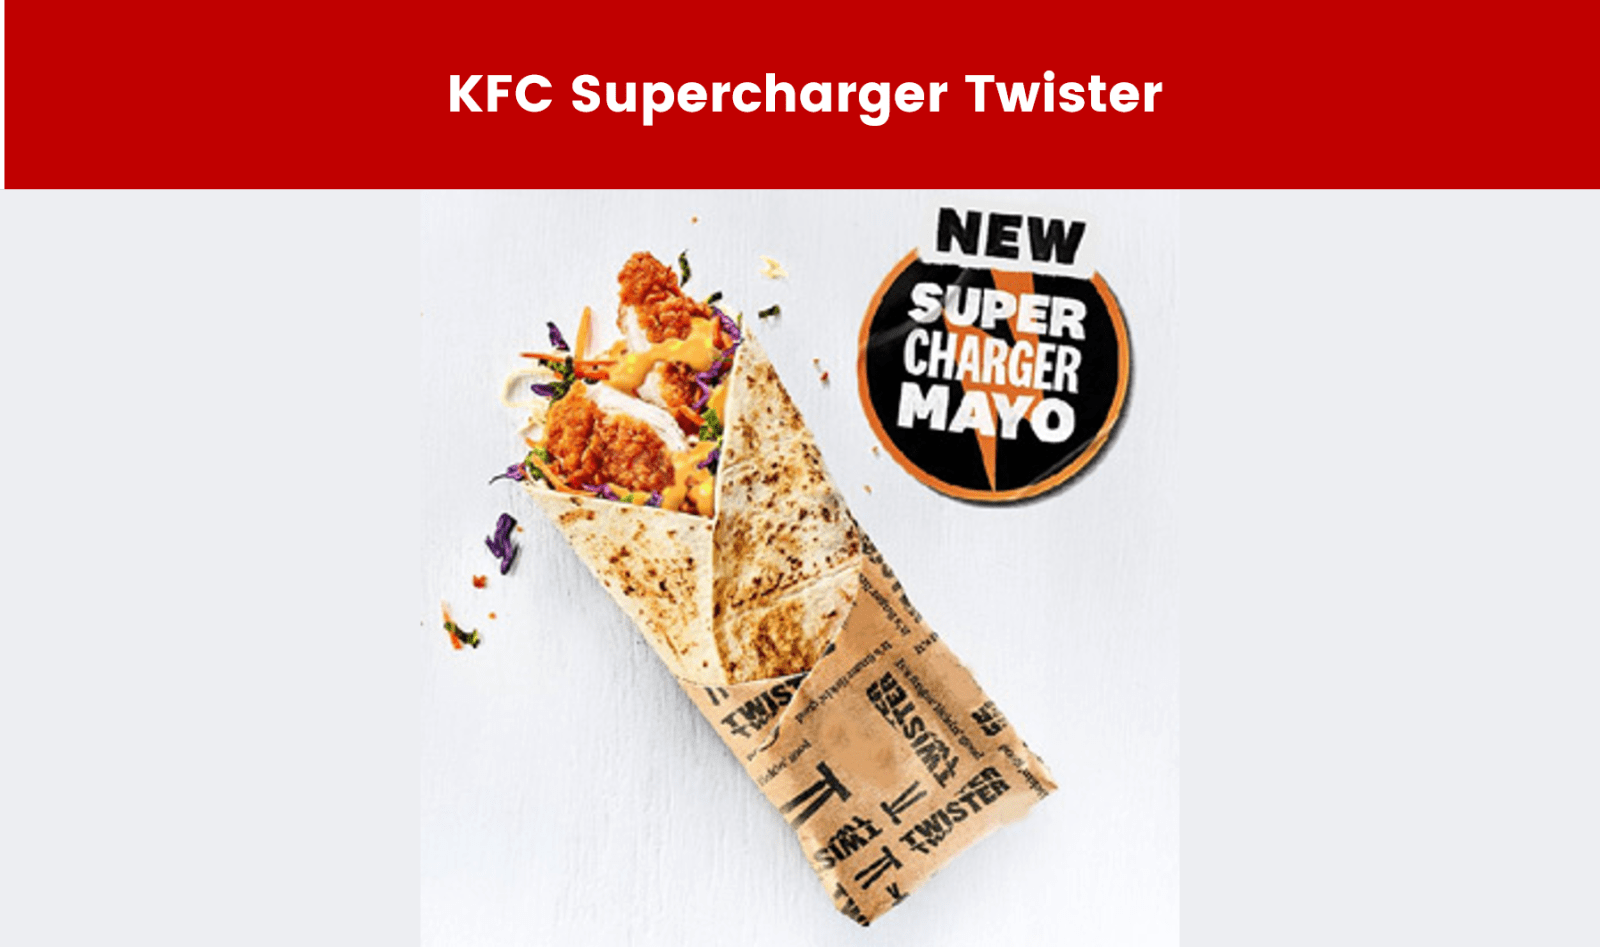 KFC Supercharger Twister
